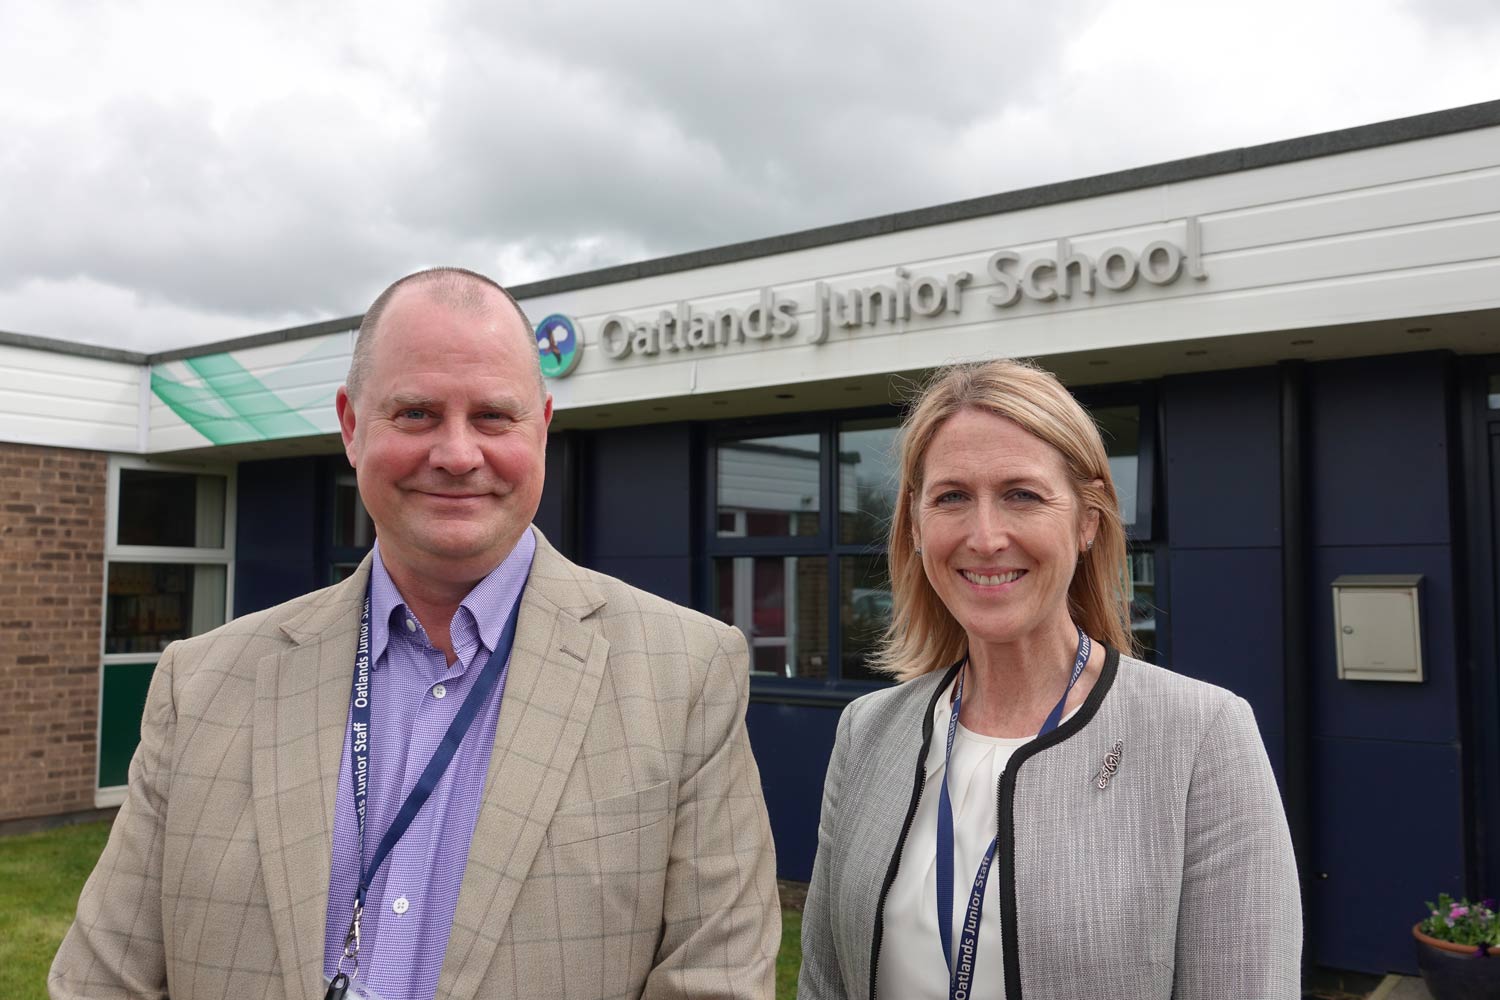 Oatlands Junior School - Chris Tulley, Governor and Estelle Weir, Headteacher